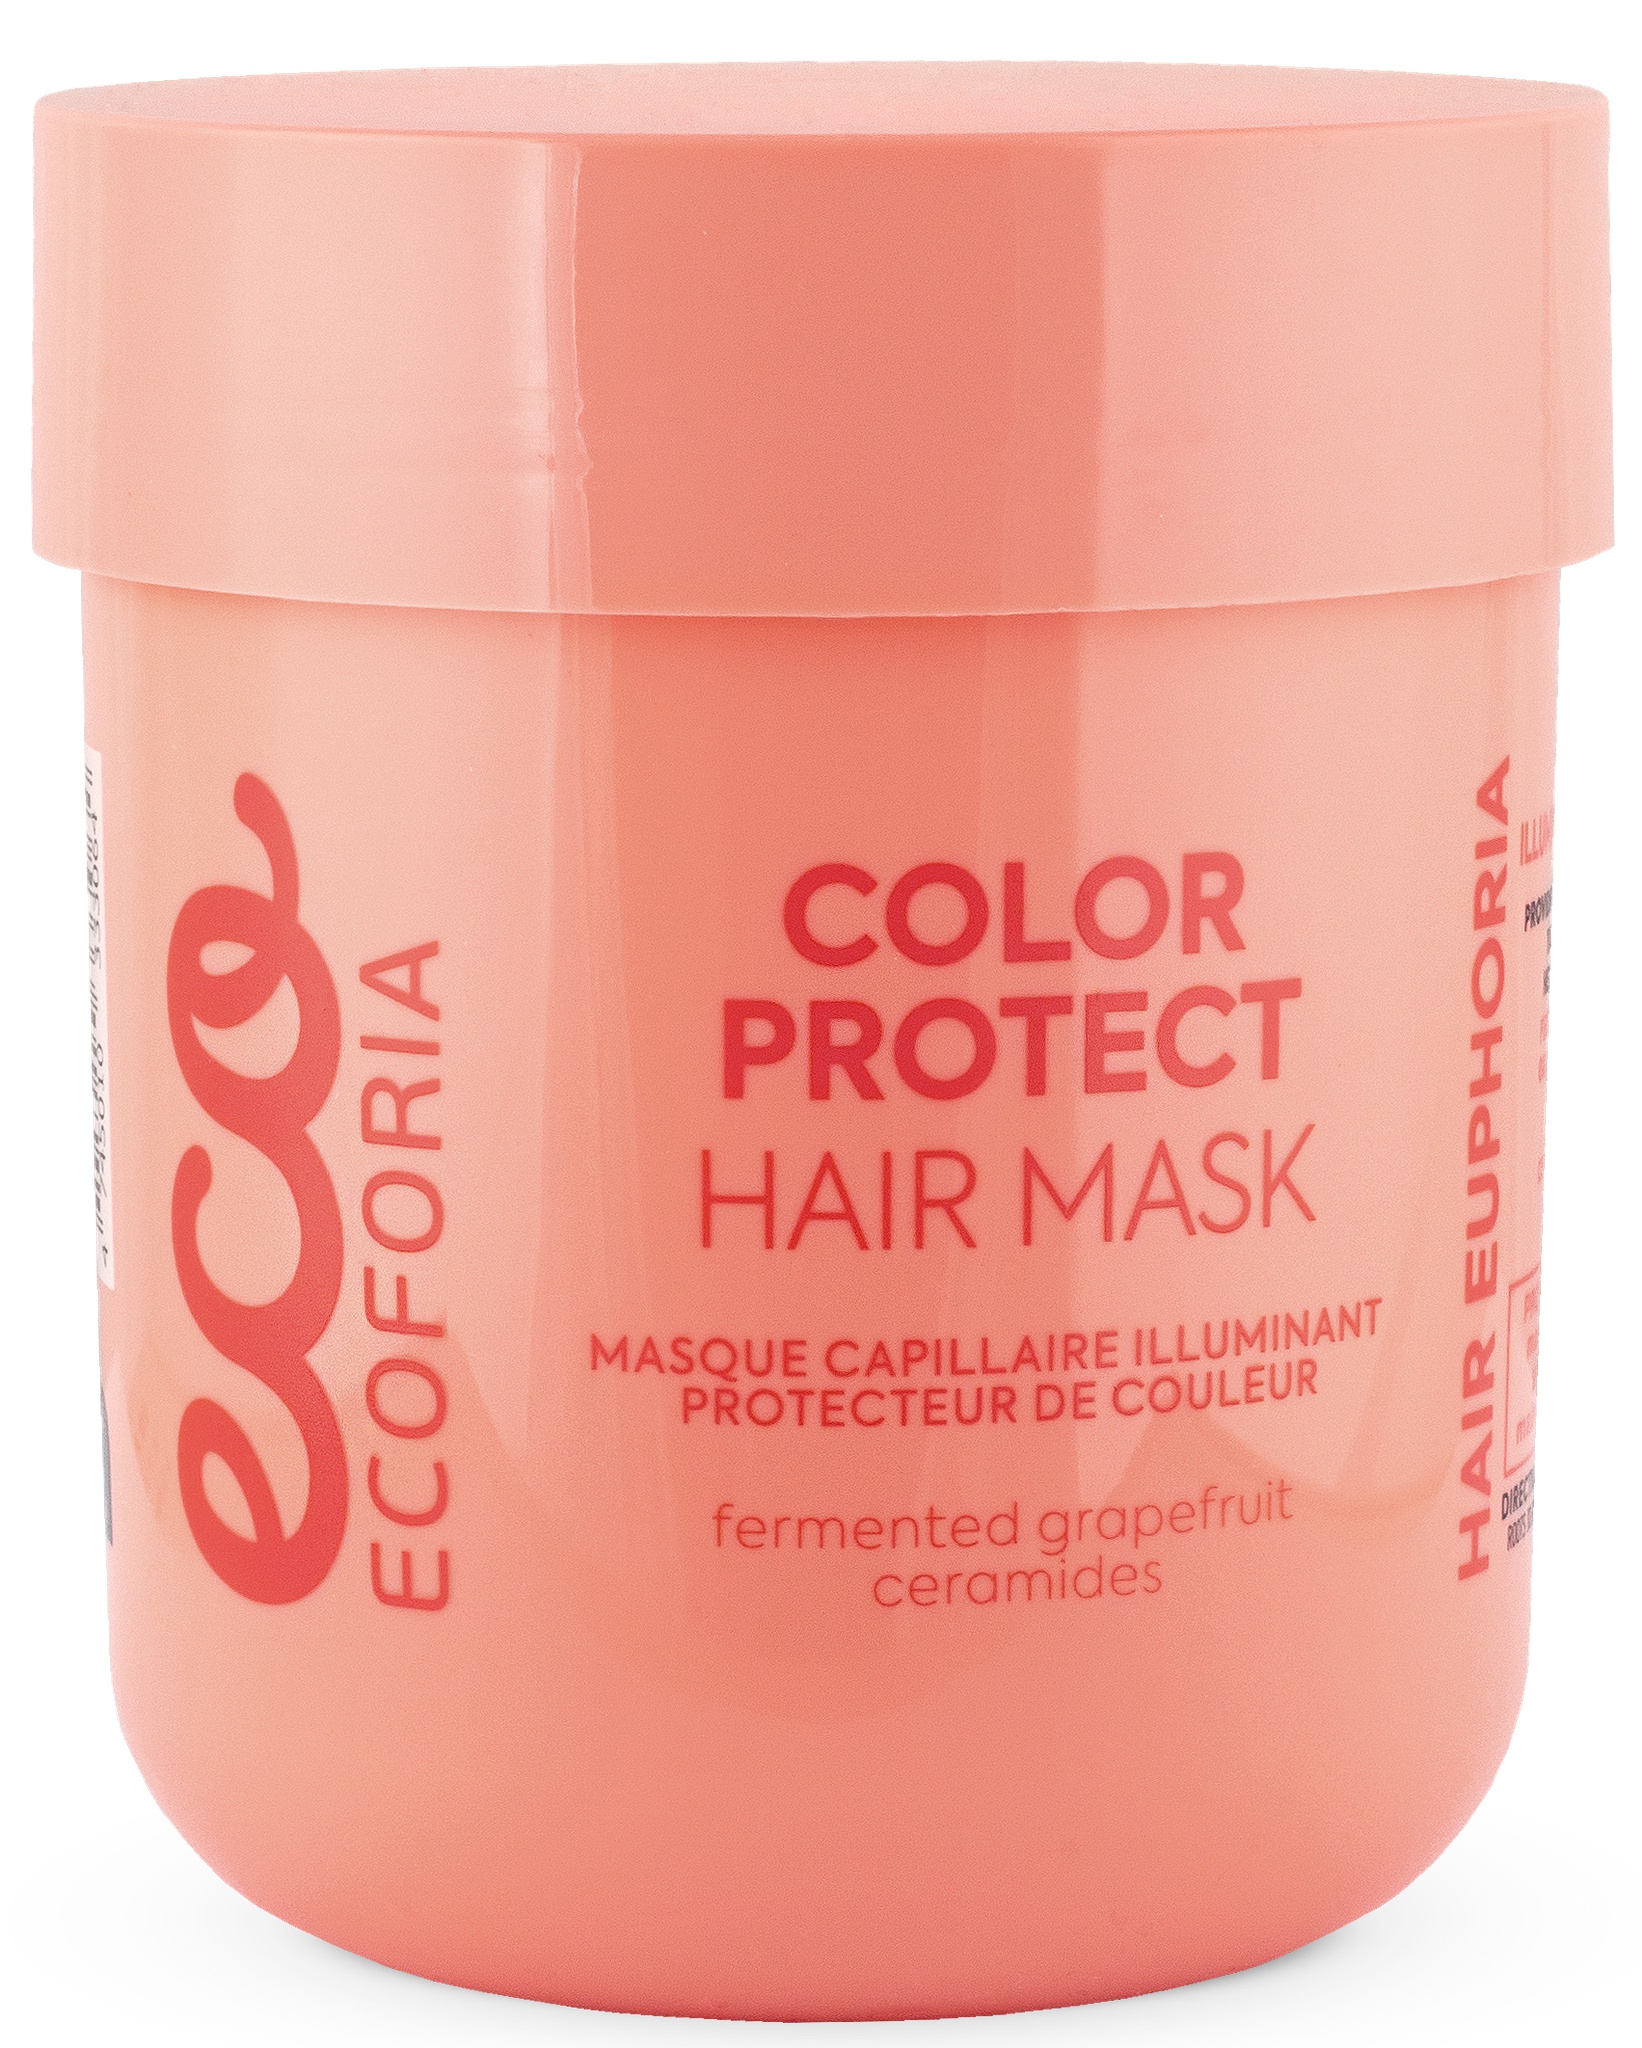 Ecoforia Color Protect Hair Mask